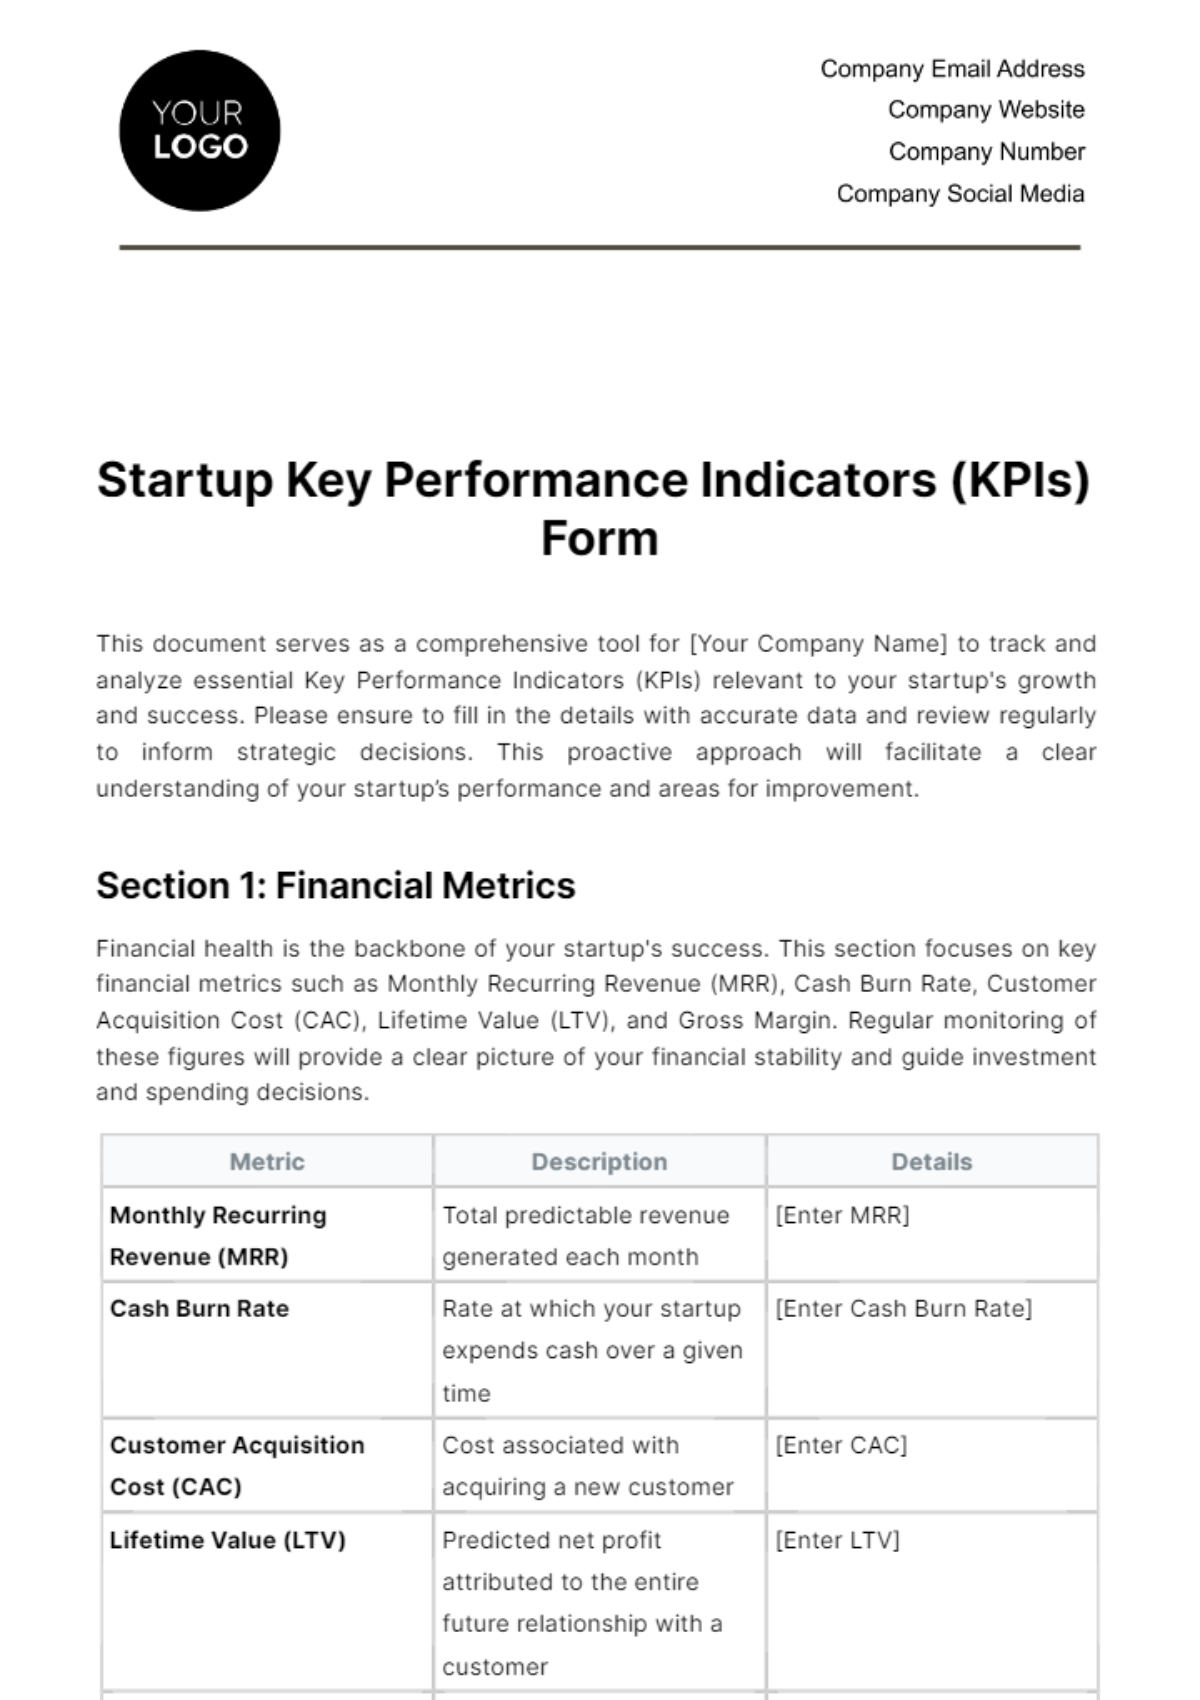 Free Startup Key Performance Indicators (KPIs) Form Template